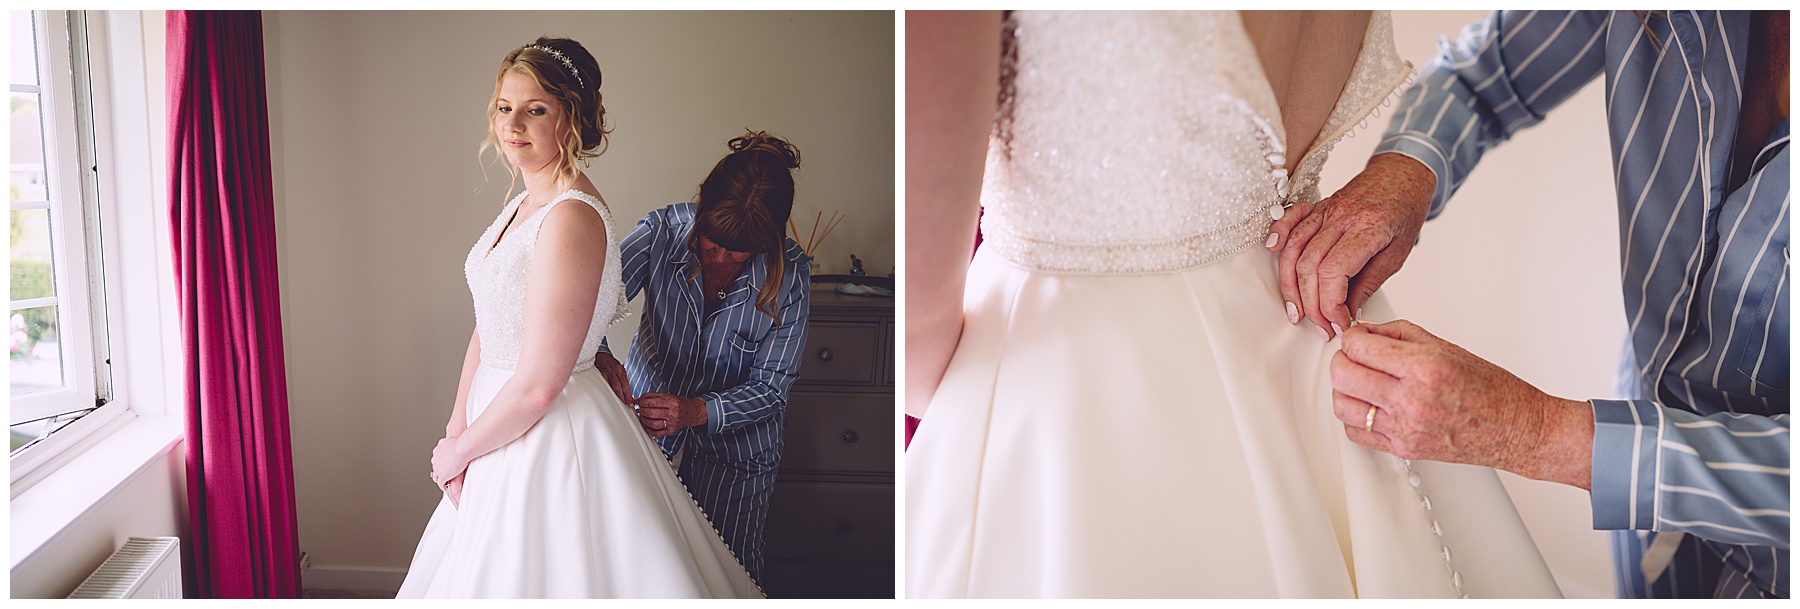 Bridal Preparations Photography